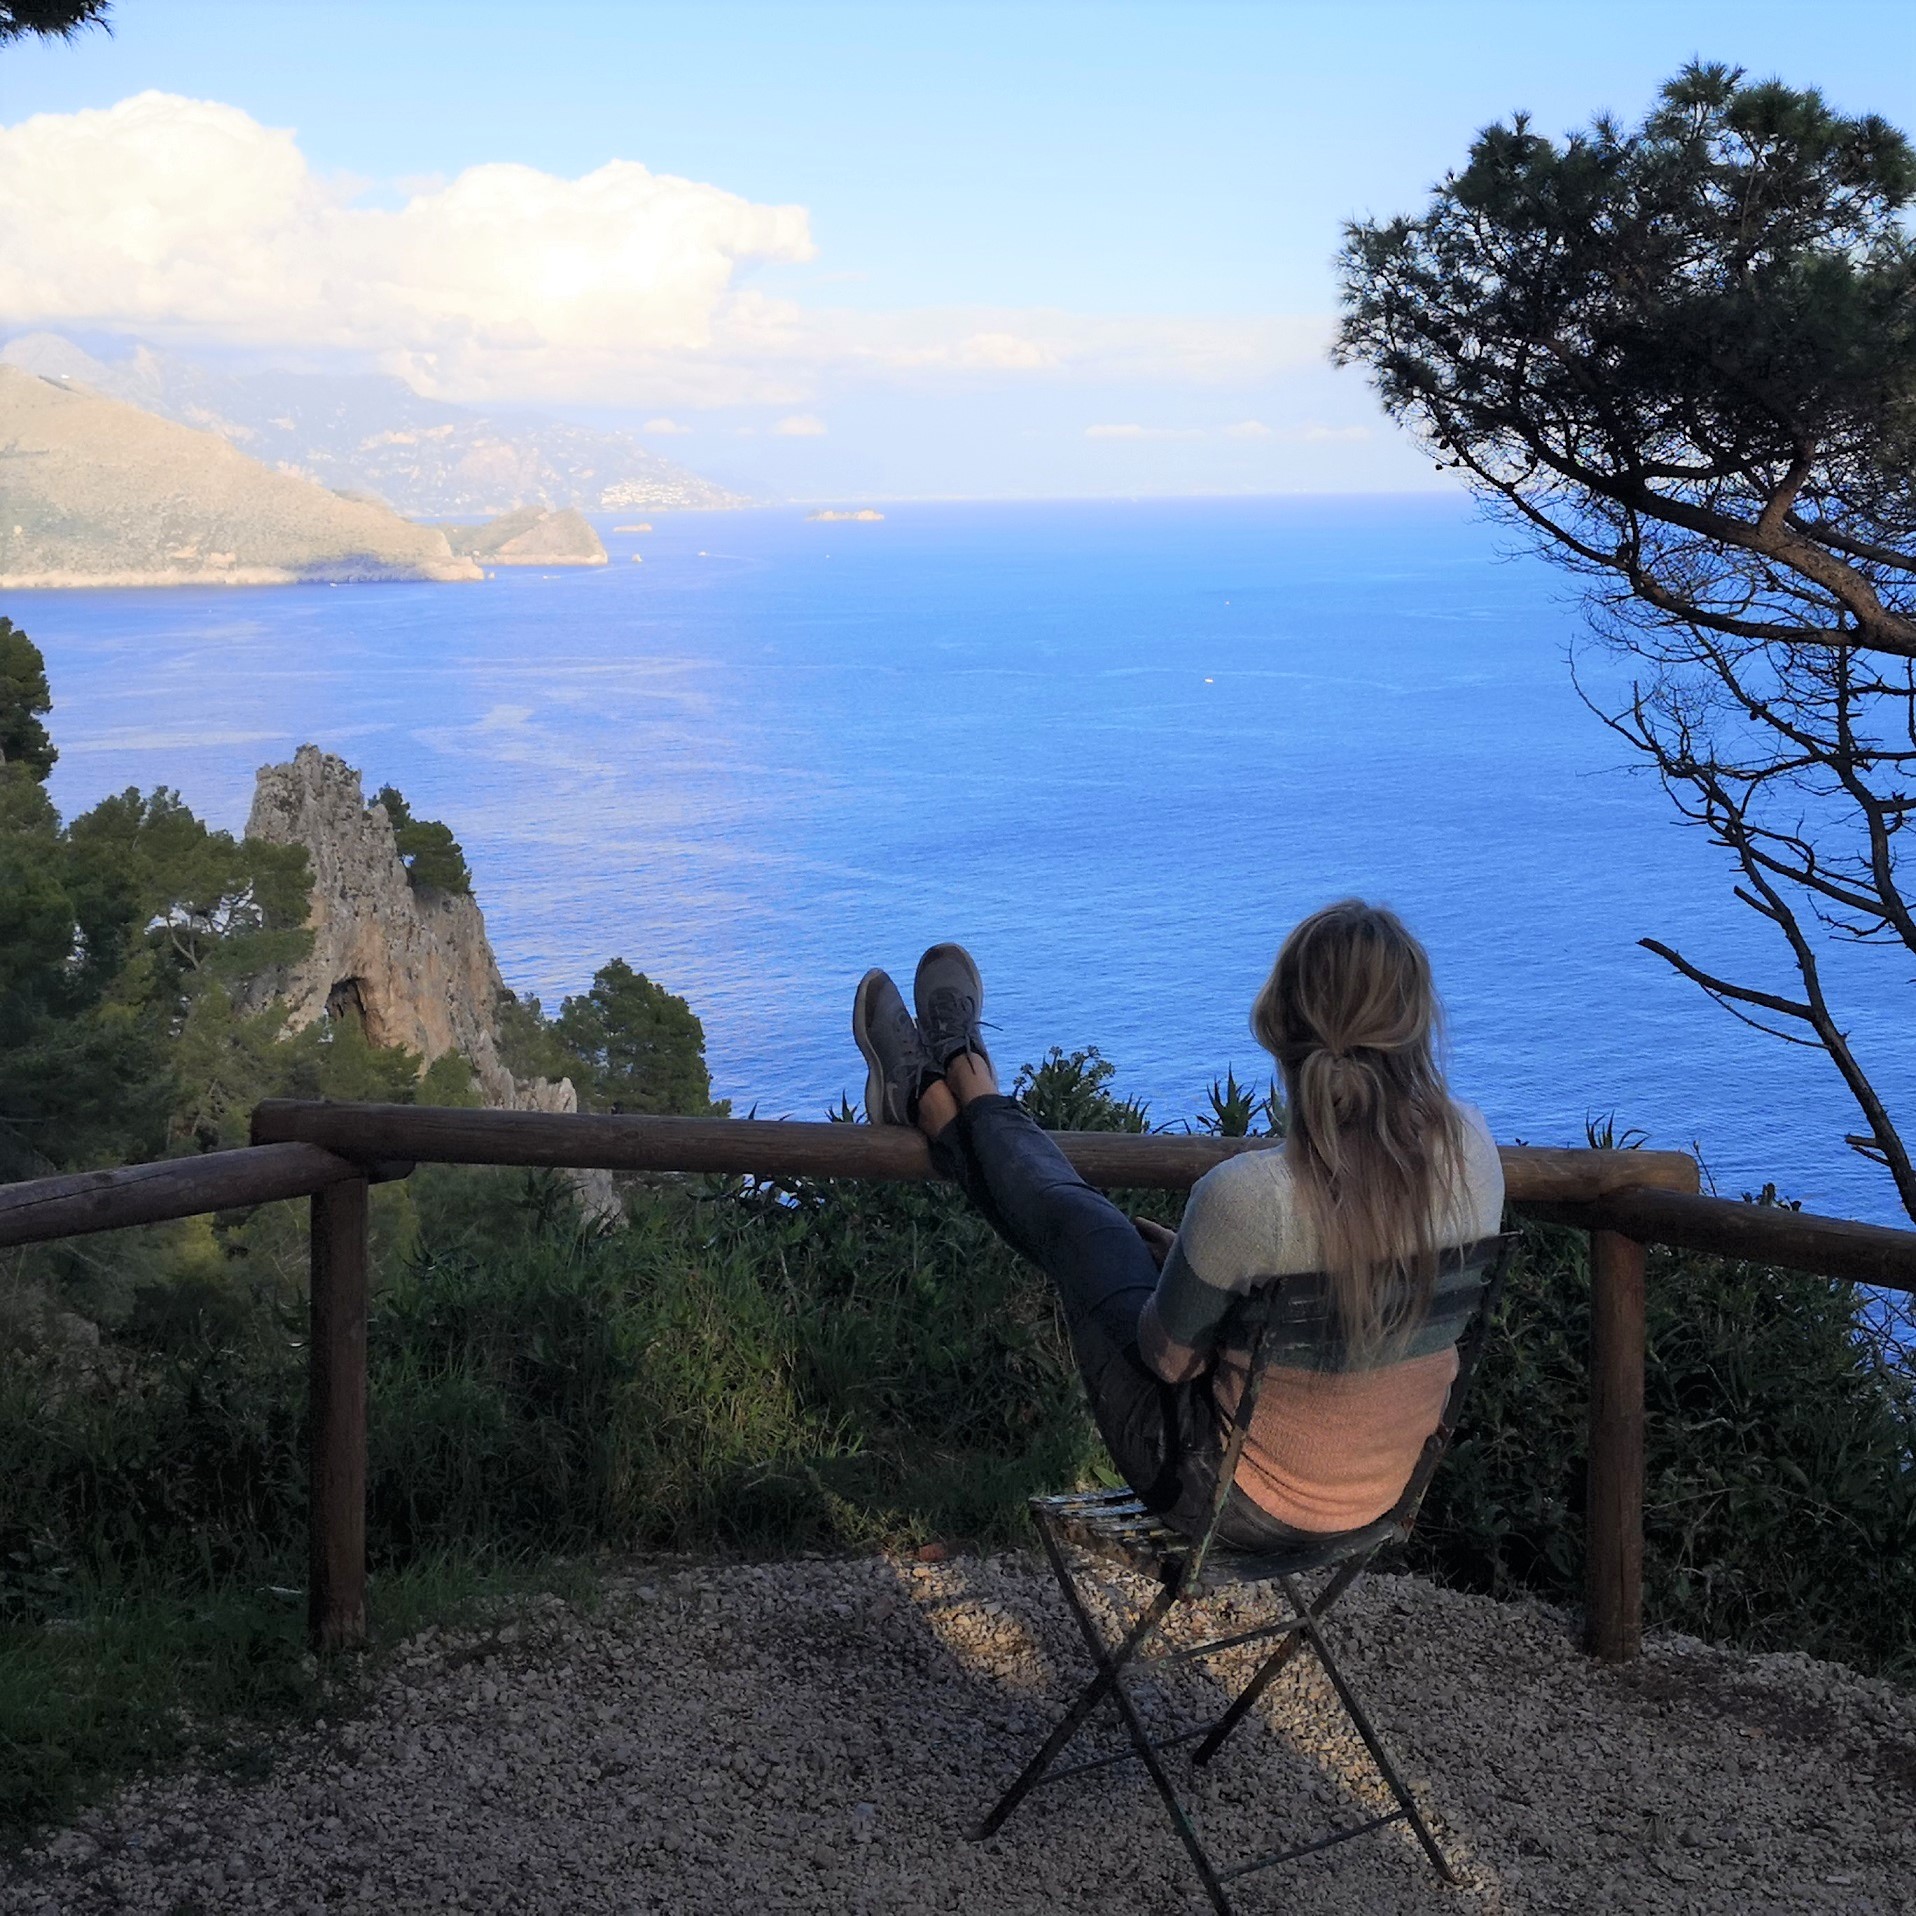 Capri island